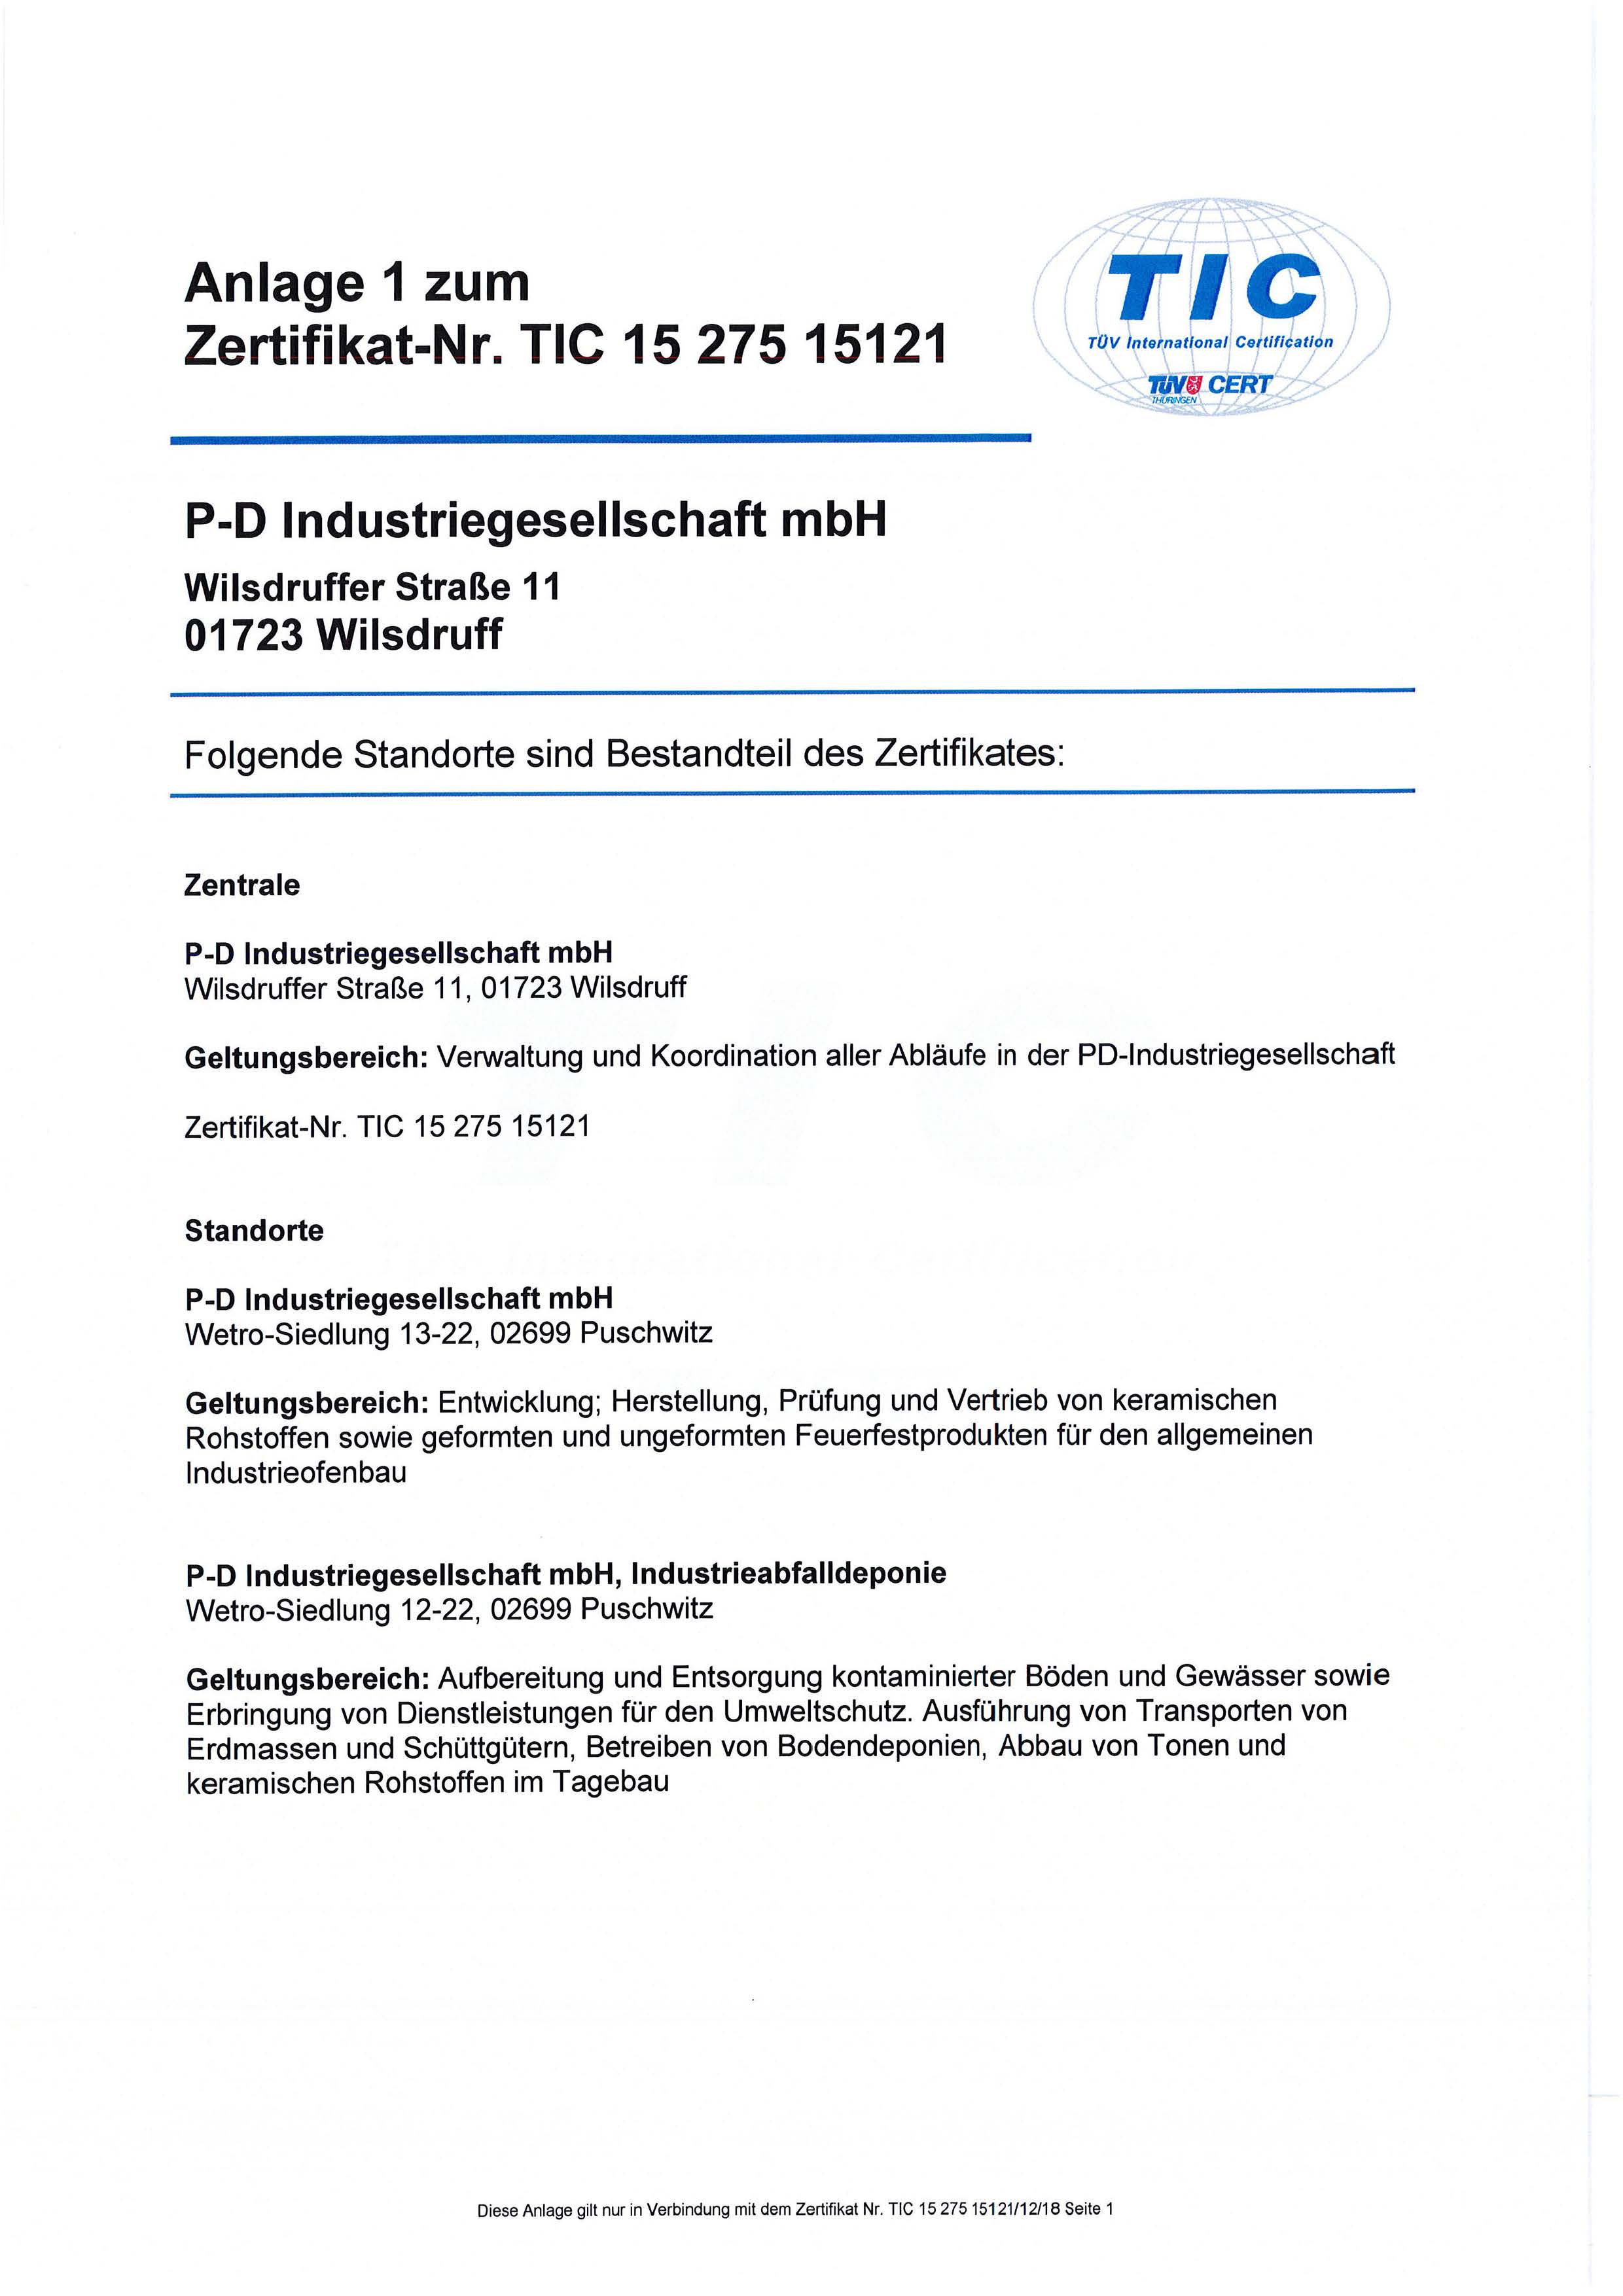 P-D Industriegesellschaft mbH · DIN EN ISO 50001:2018 (Anlage)